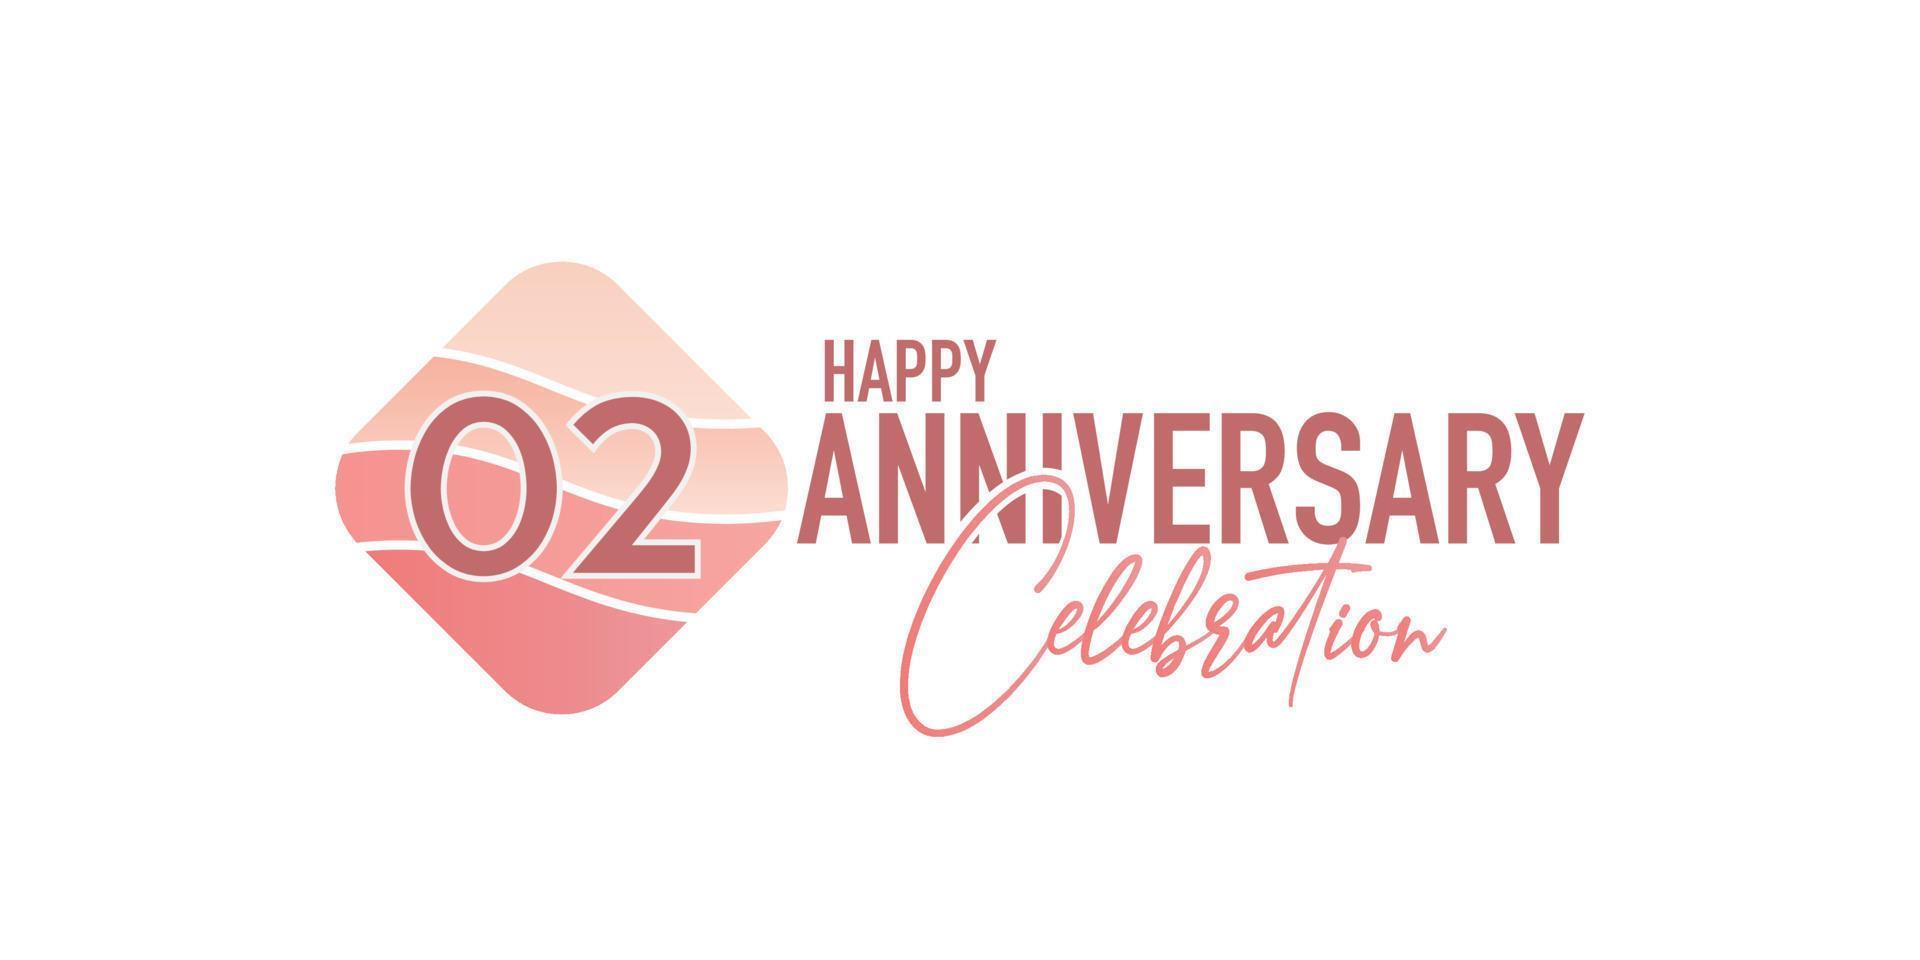 02 years anniversary logo vector illustration design celebration with pink geometric design